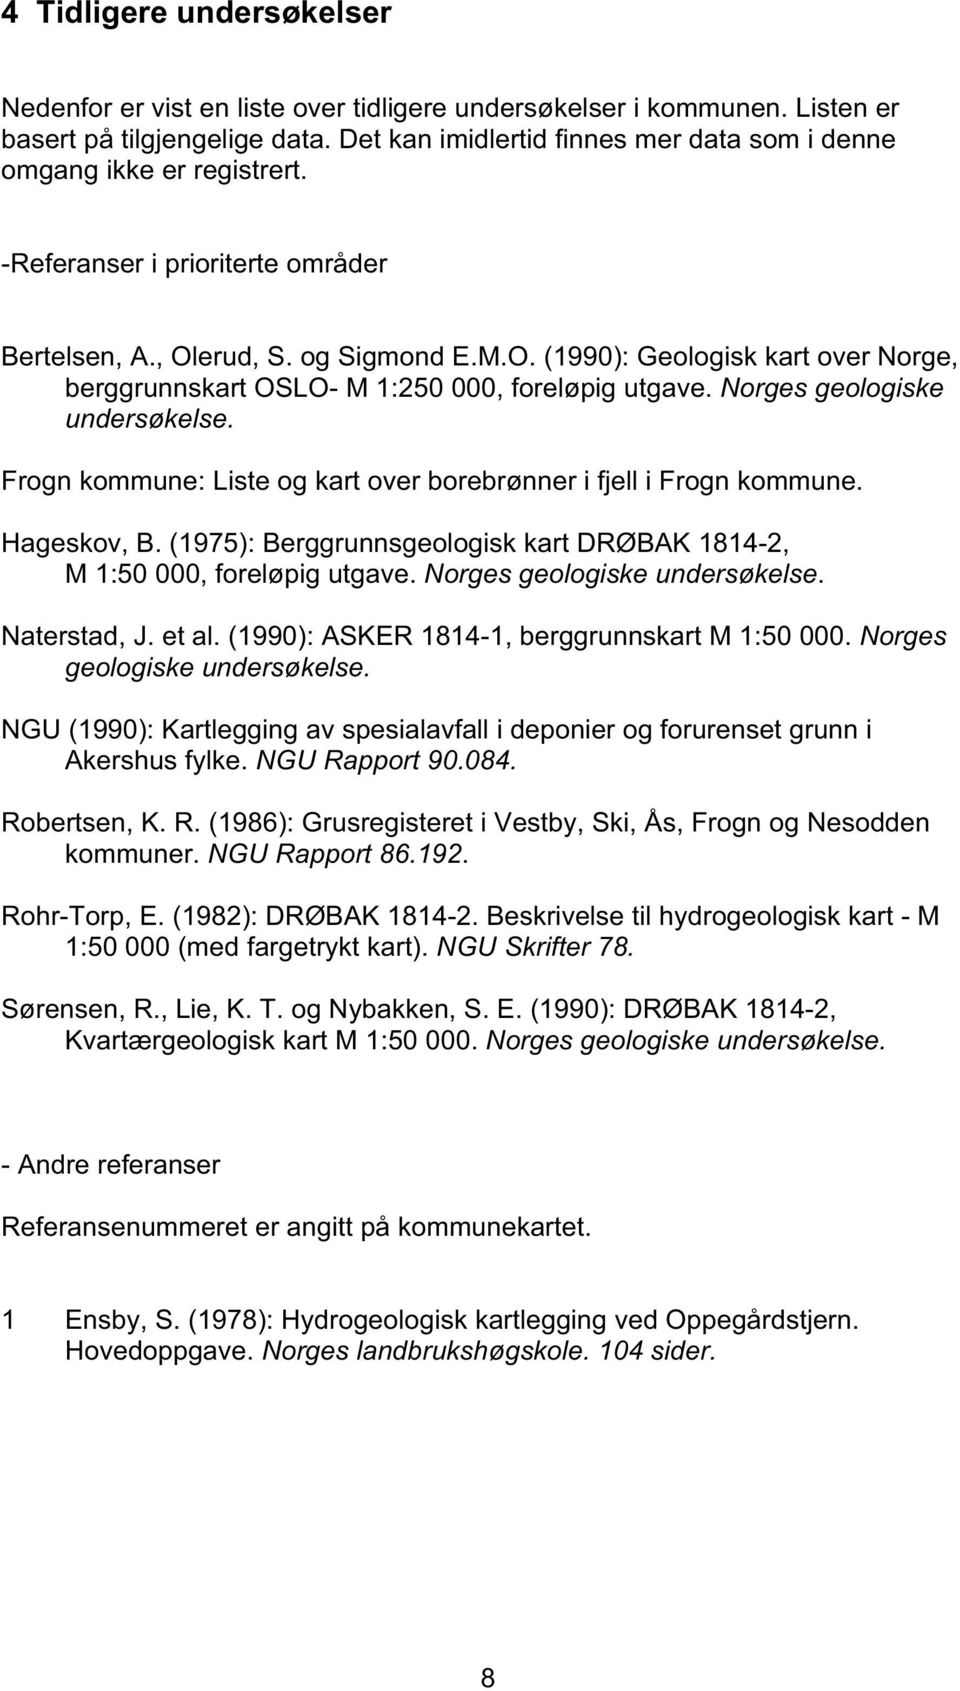 erud, S. og Sigmond E.M.O. (1990): Geologisk kart over Norge, berggrunnskart OSLO- M 1:250 000, foreløpig utgave. Norges geologiske undersøkelse.